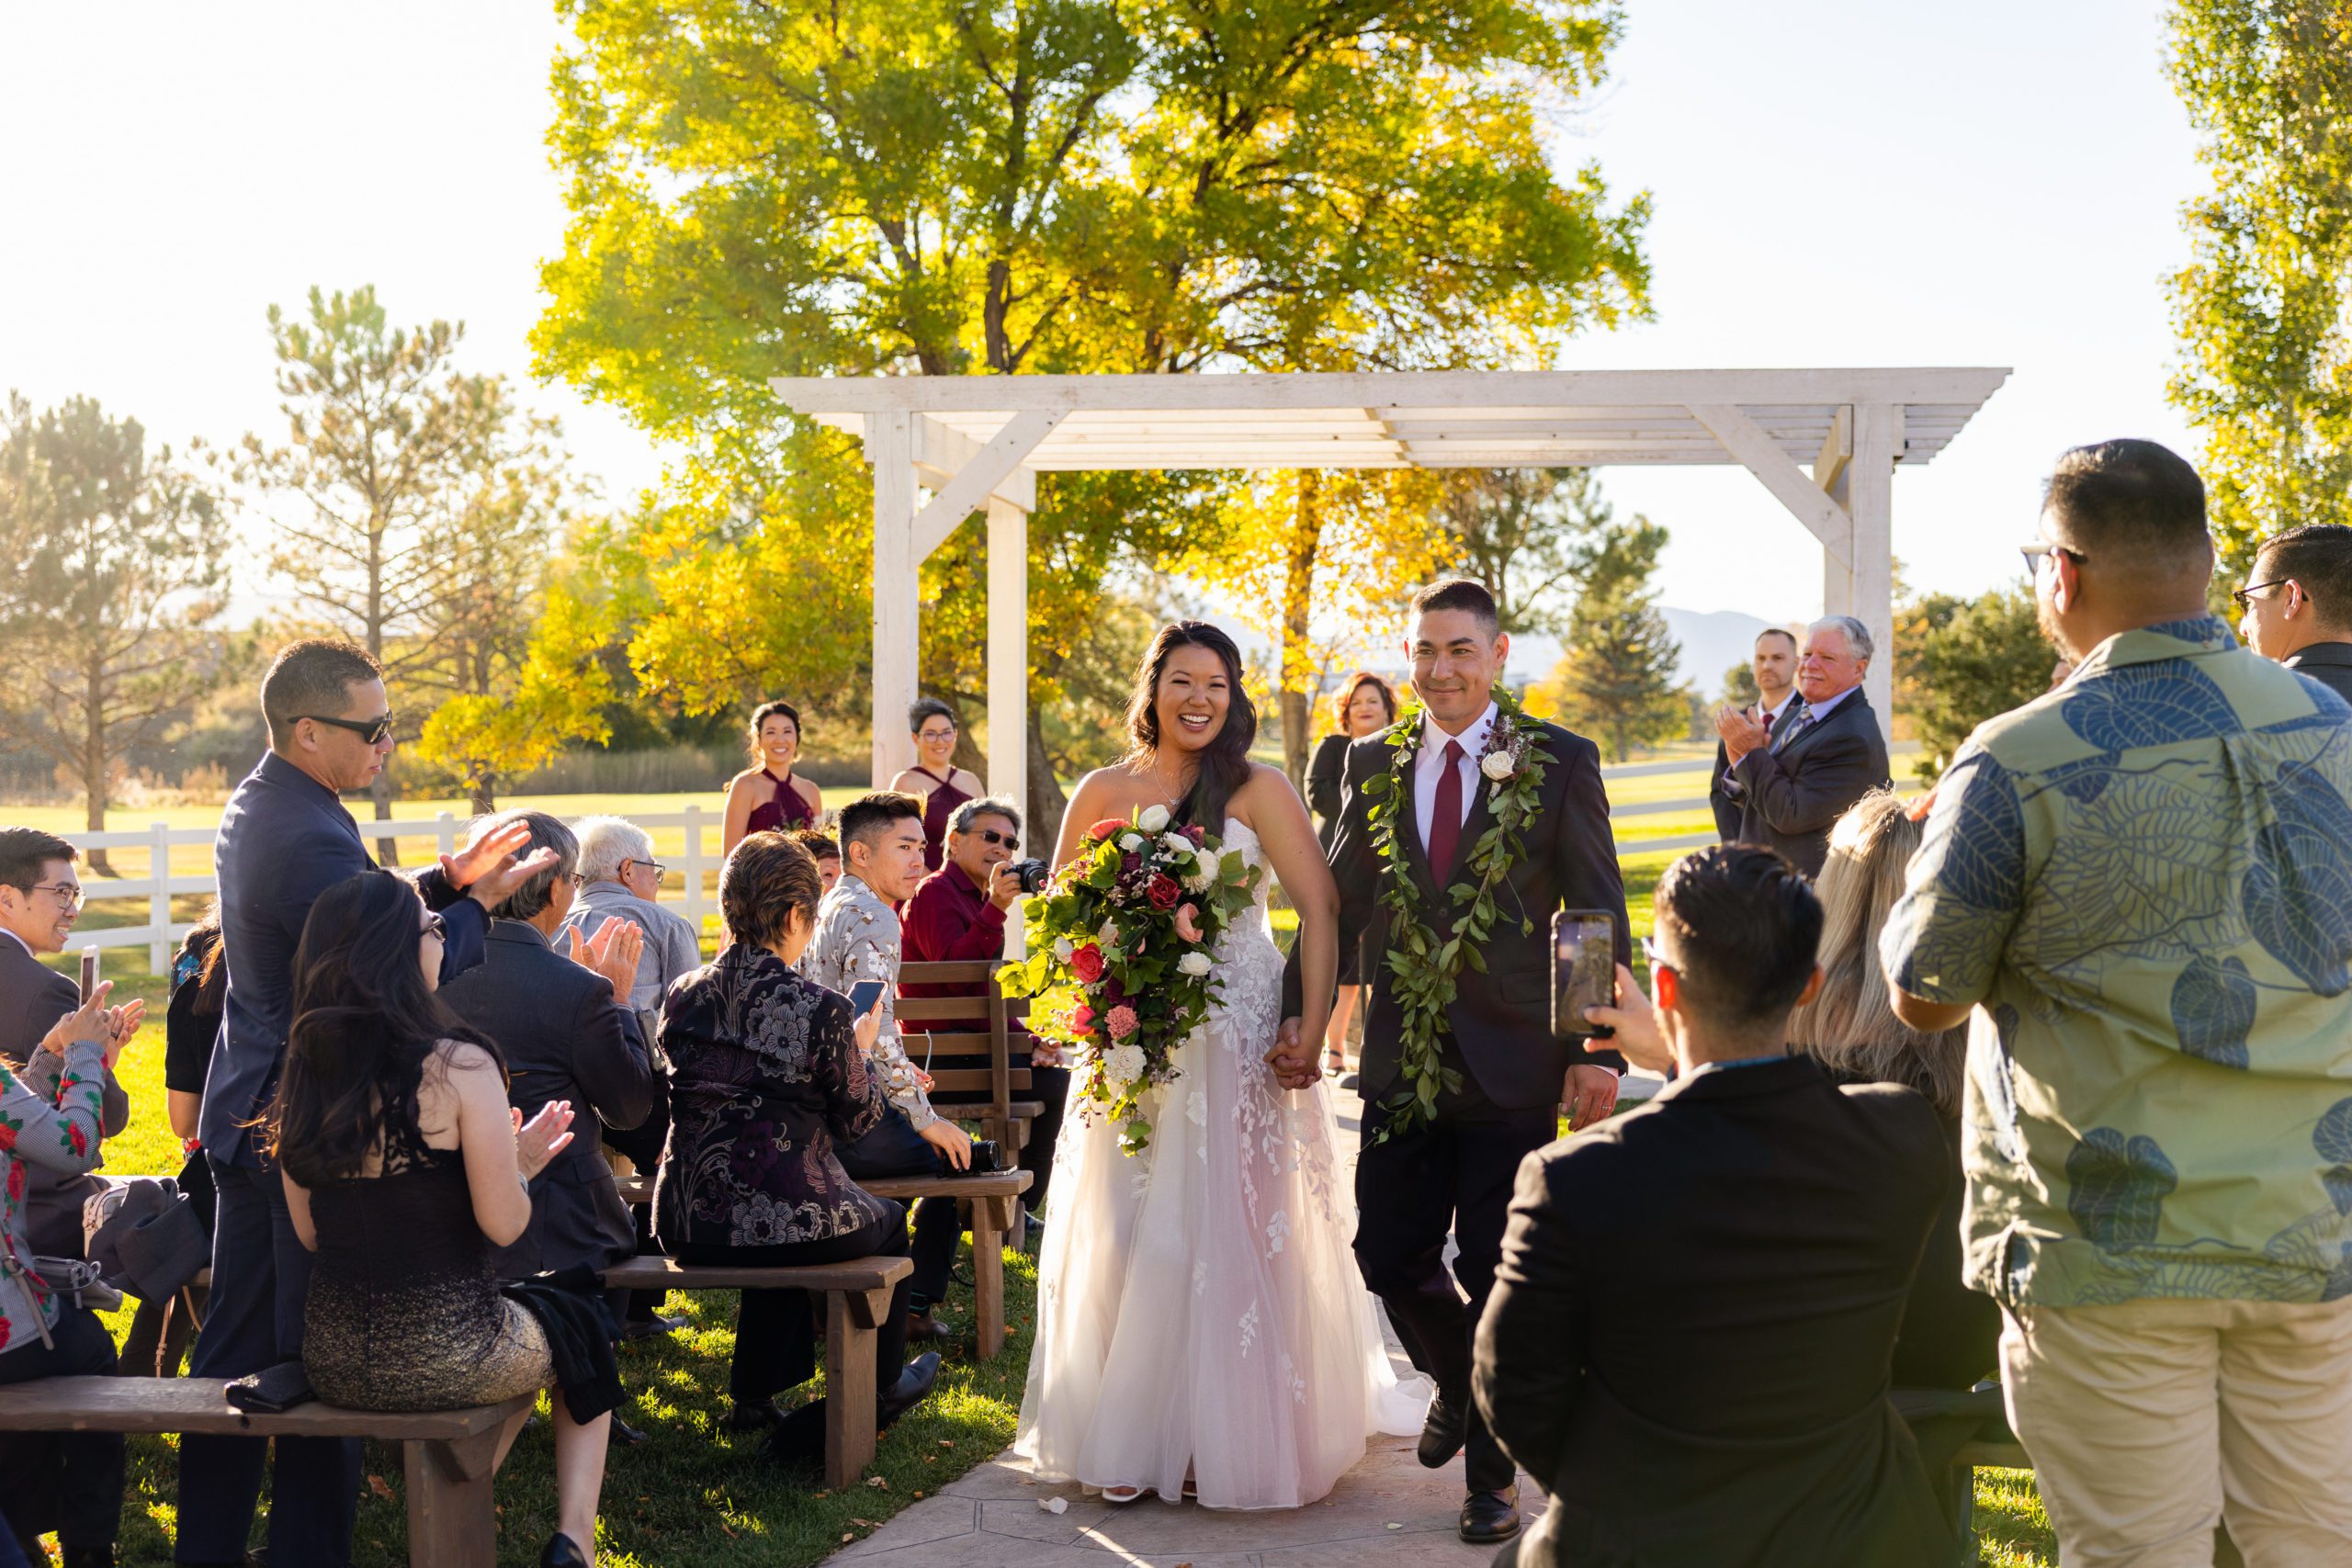 Fall wedding at The Barn at Raccoon Creek in Littleton Colorado, Sola wood wedding flowers, Wedding Lei, Hawaii wedding traditions